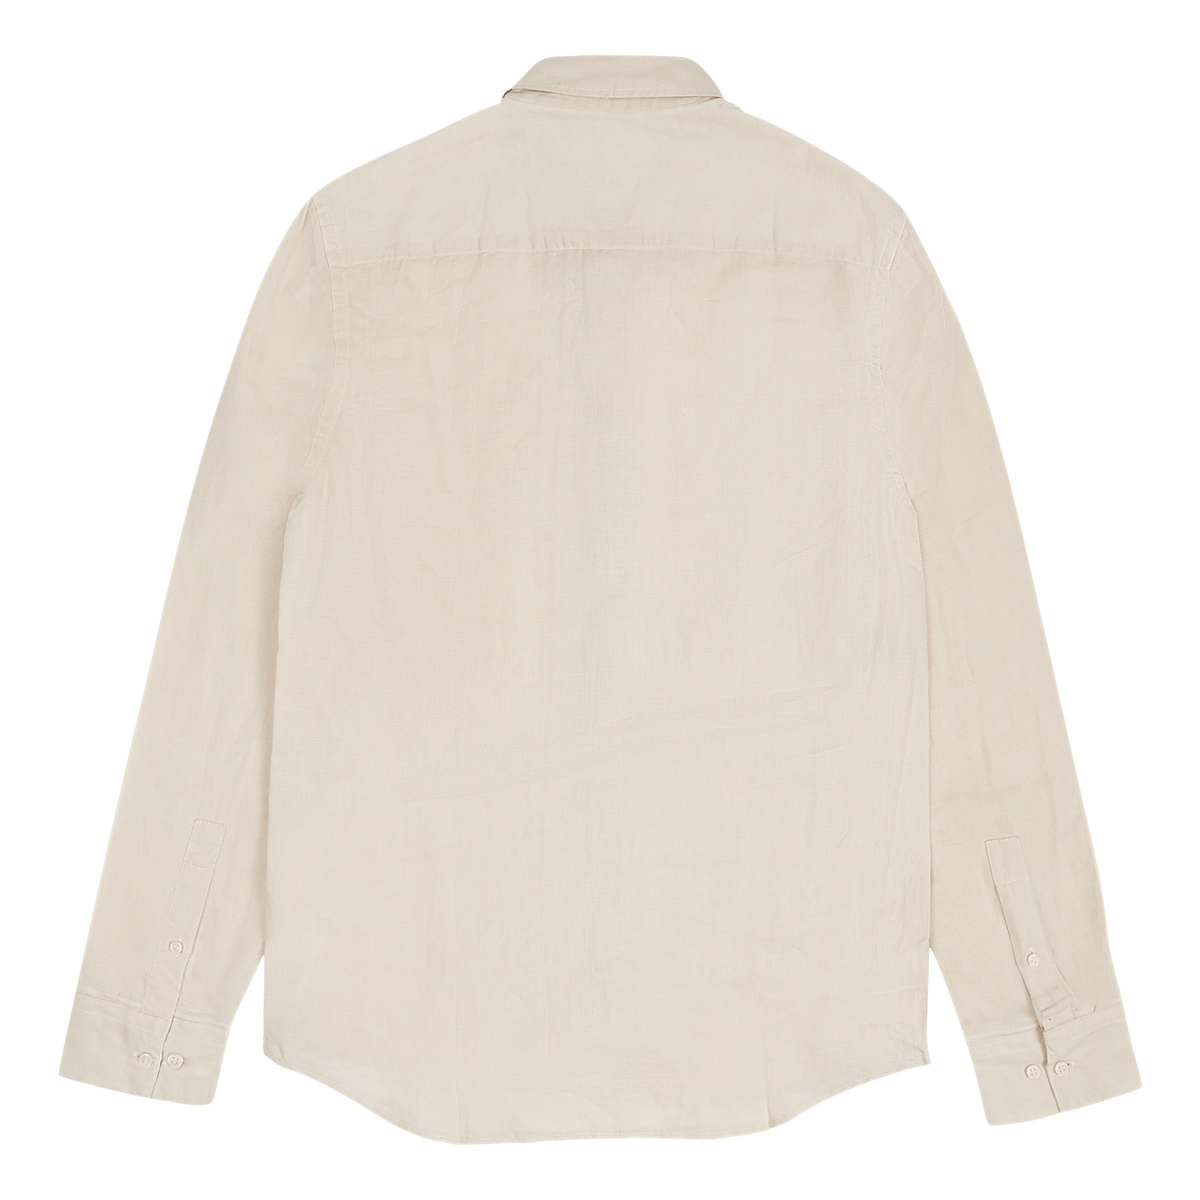 Cotton Linen Chest Pocket Shir Stony Beige